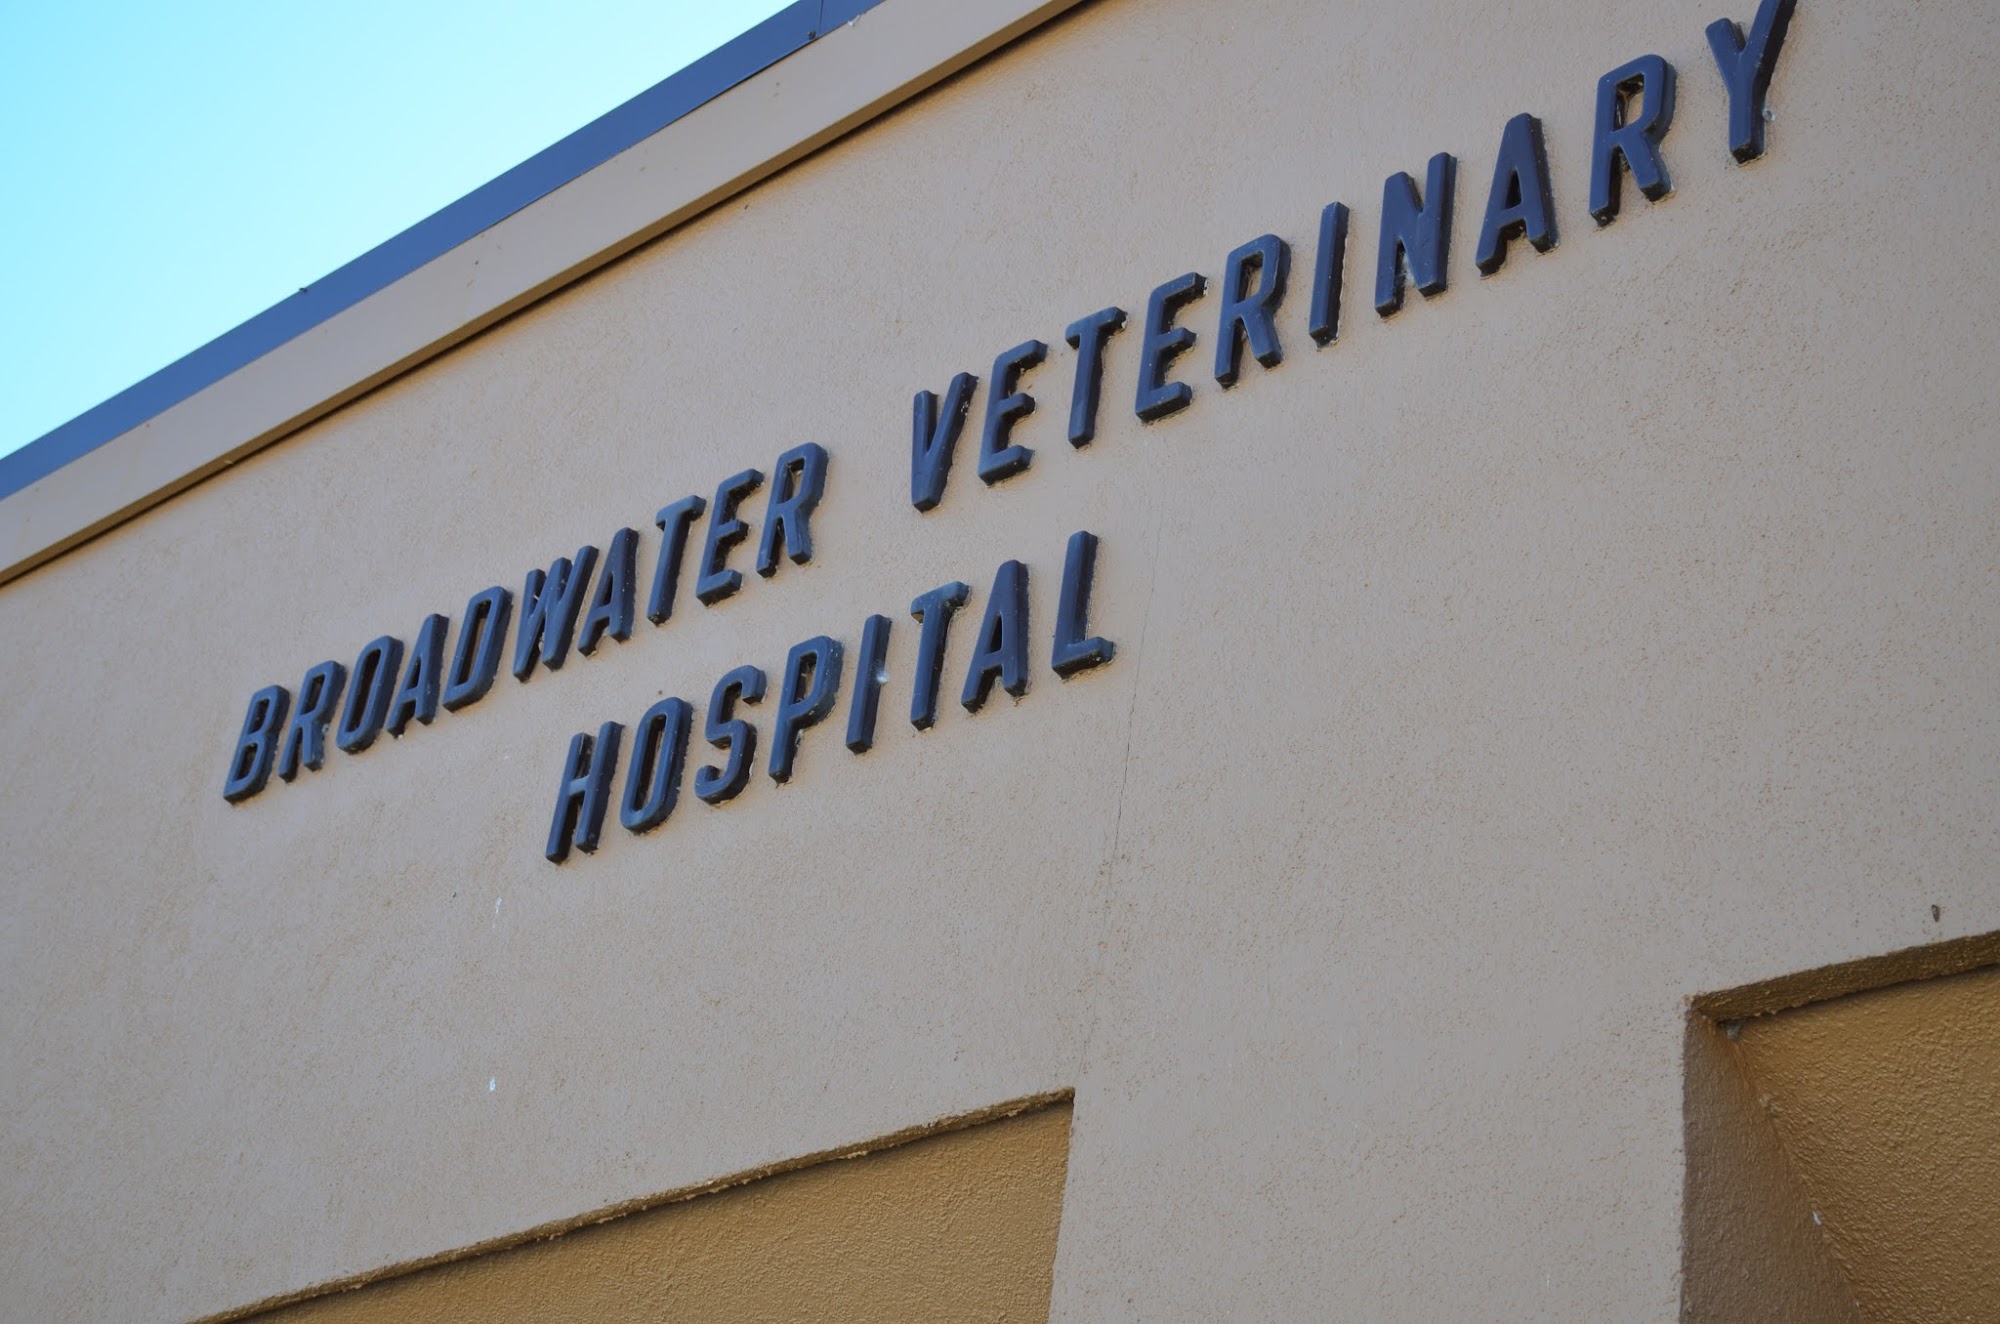 Broadwater Veterinary Hospital